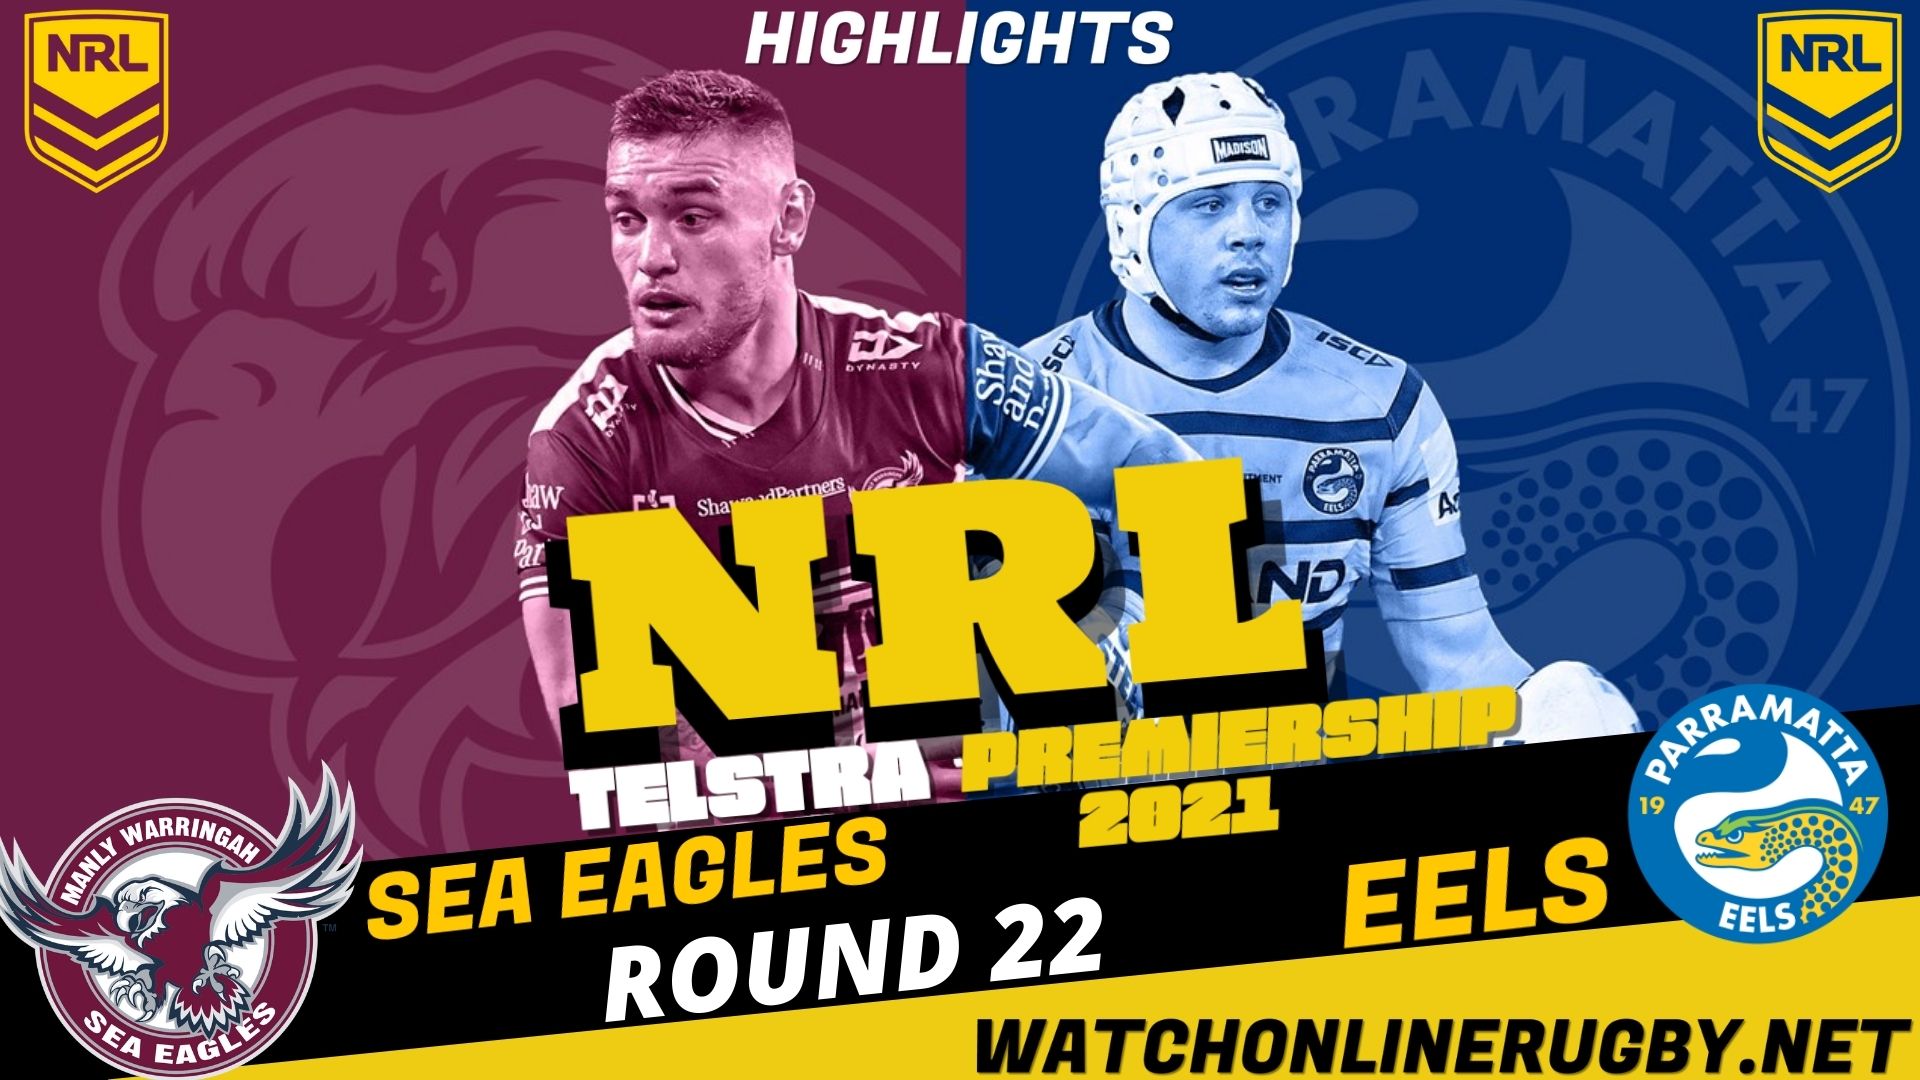 Sea Eagles Vs Eels Highlights RD 22 NRL Rugby